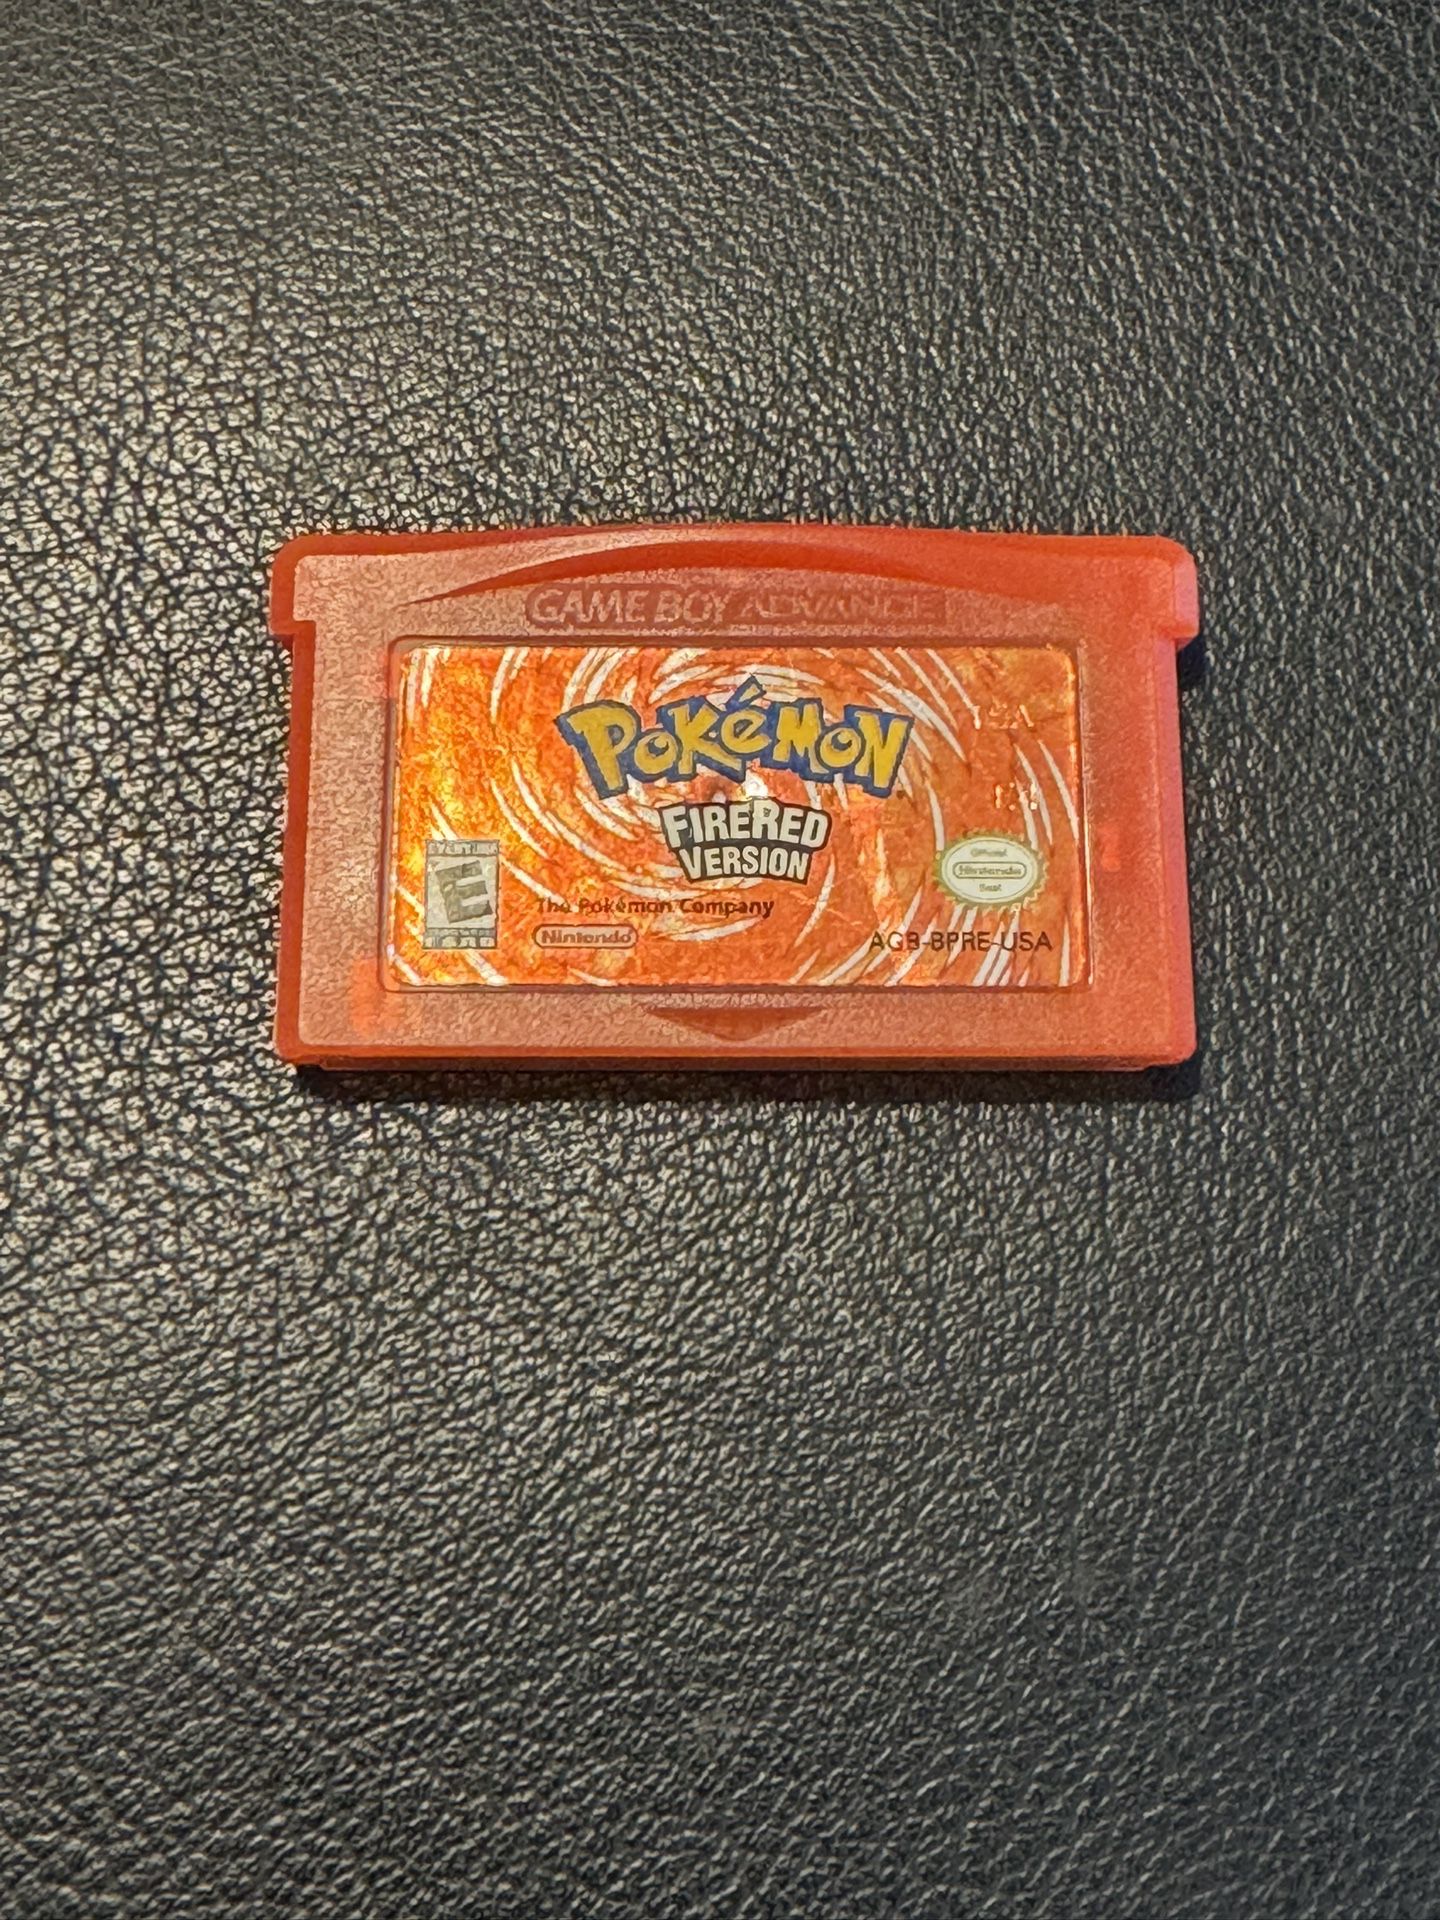 Pokémon Fire Red Version for Gameboy Advance